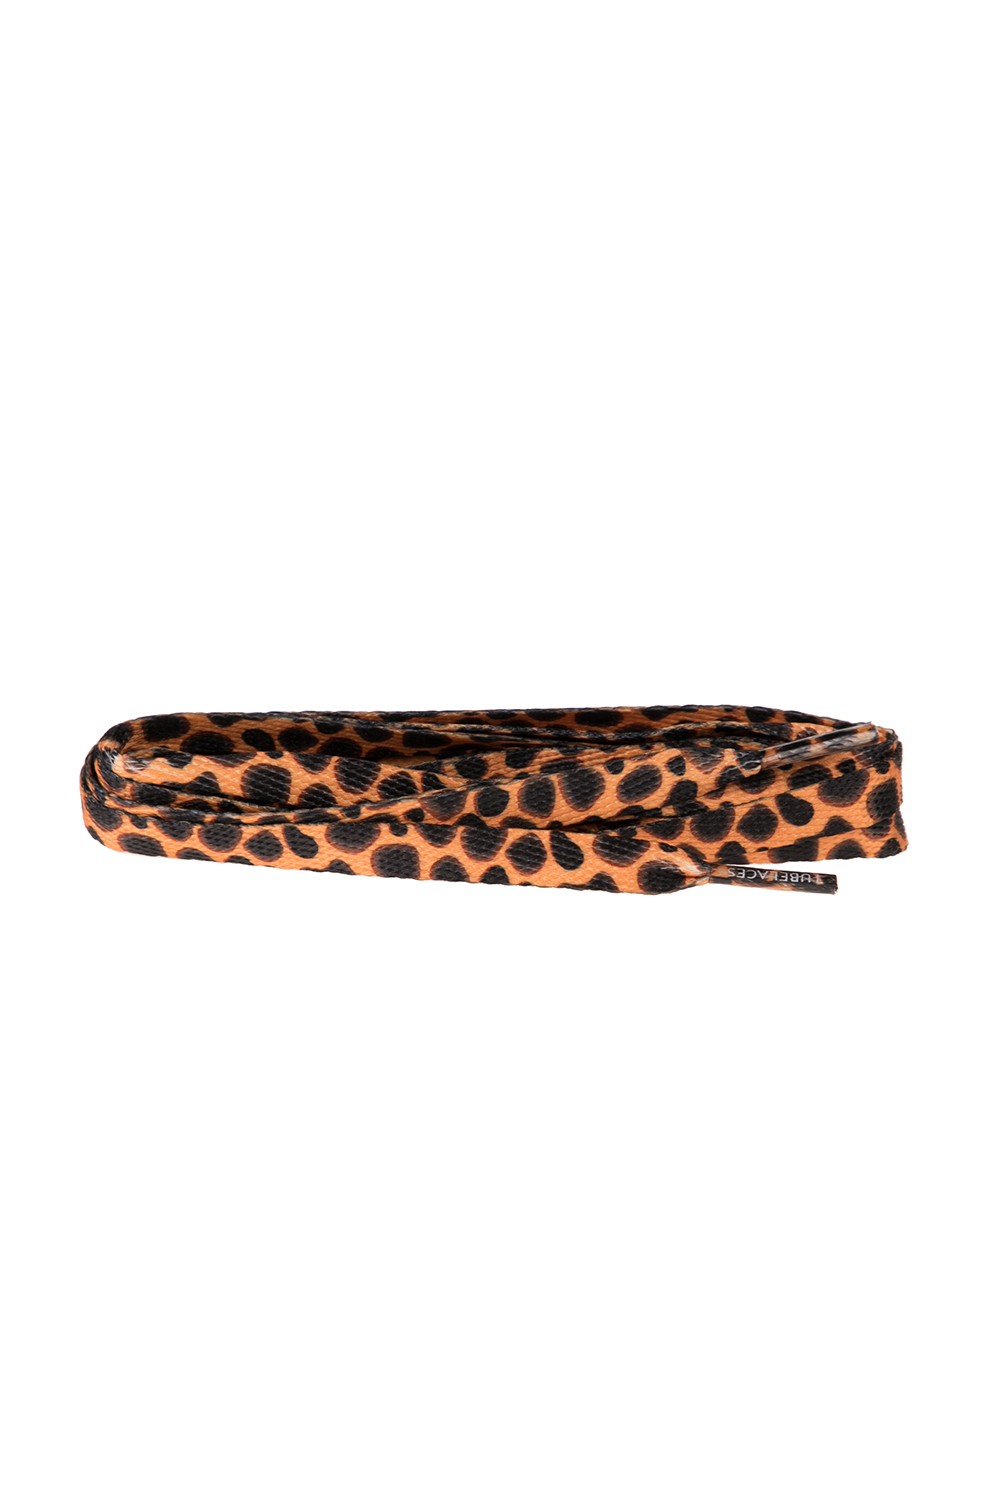 TUBELACES – Κορδονια παπουτσιων TUBELACES SPECIAL FLAT καφε leopard